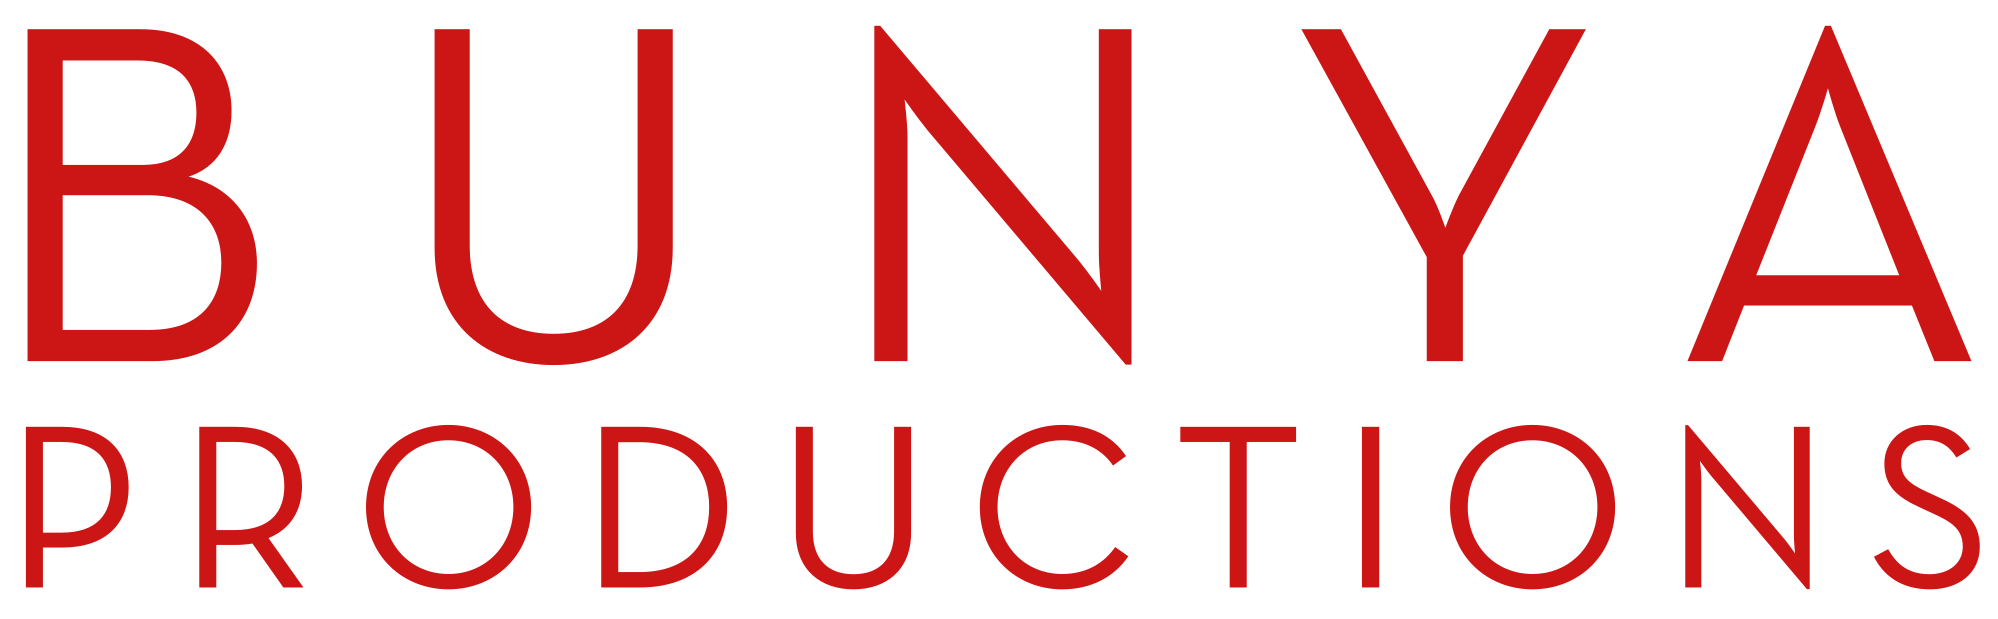 Bunya Productions - company